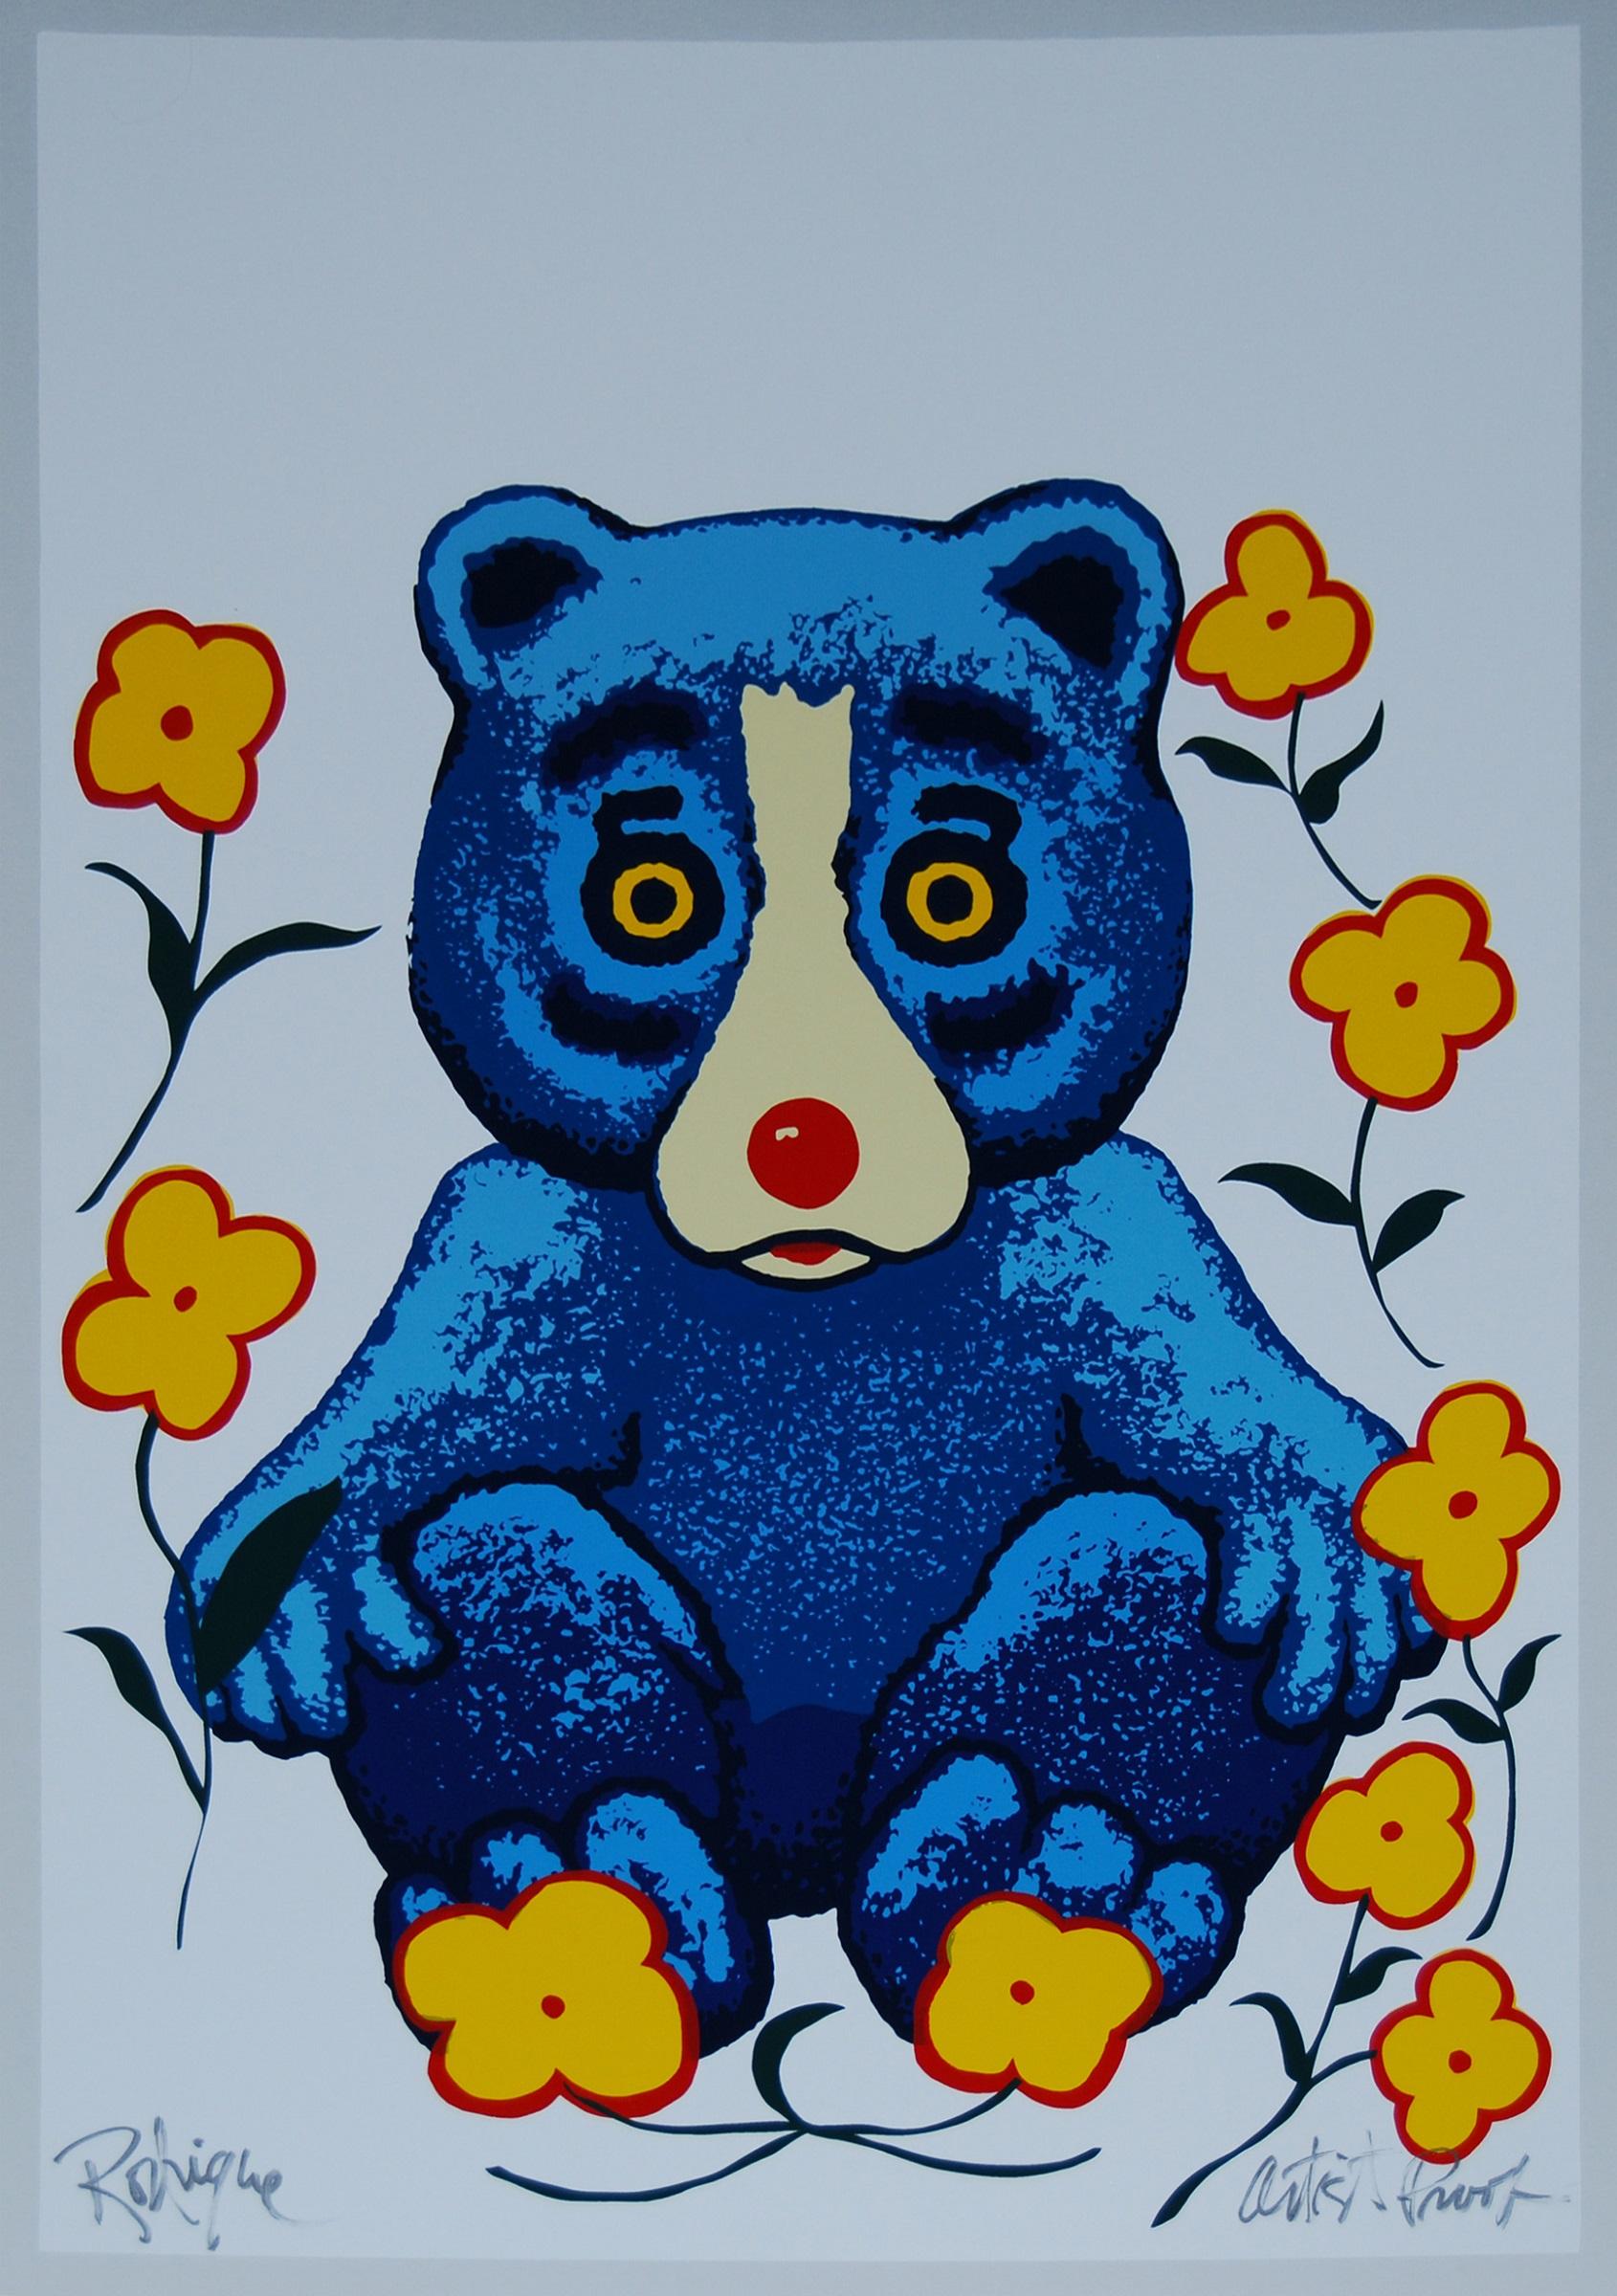 George Rodrigue Animal Print - Bearly Spring White - Signed Silkscreen Blue Dog Print